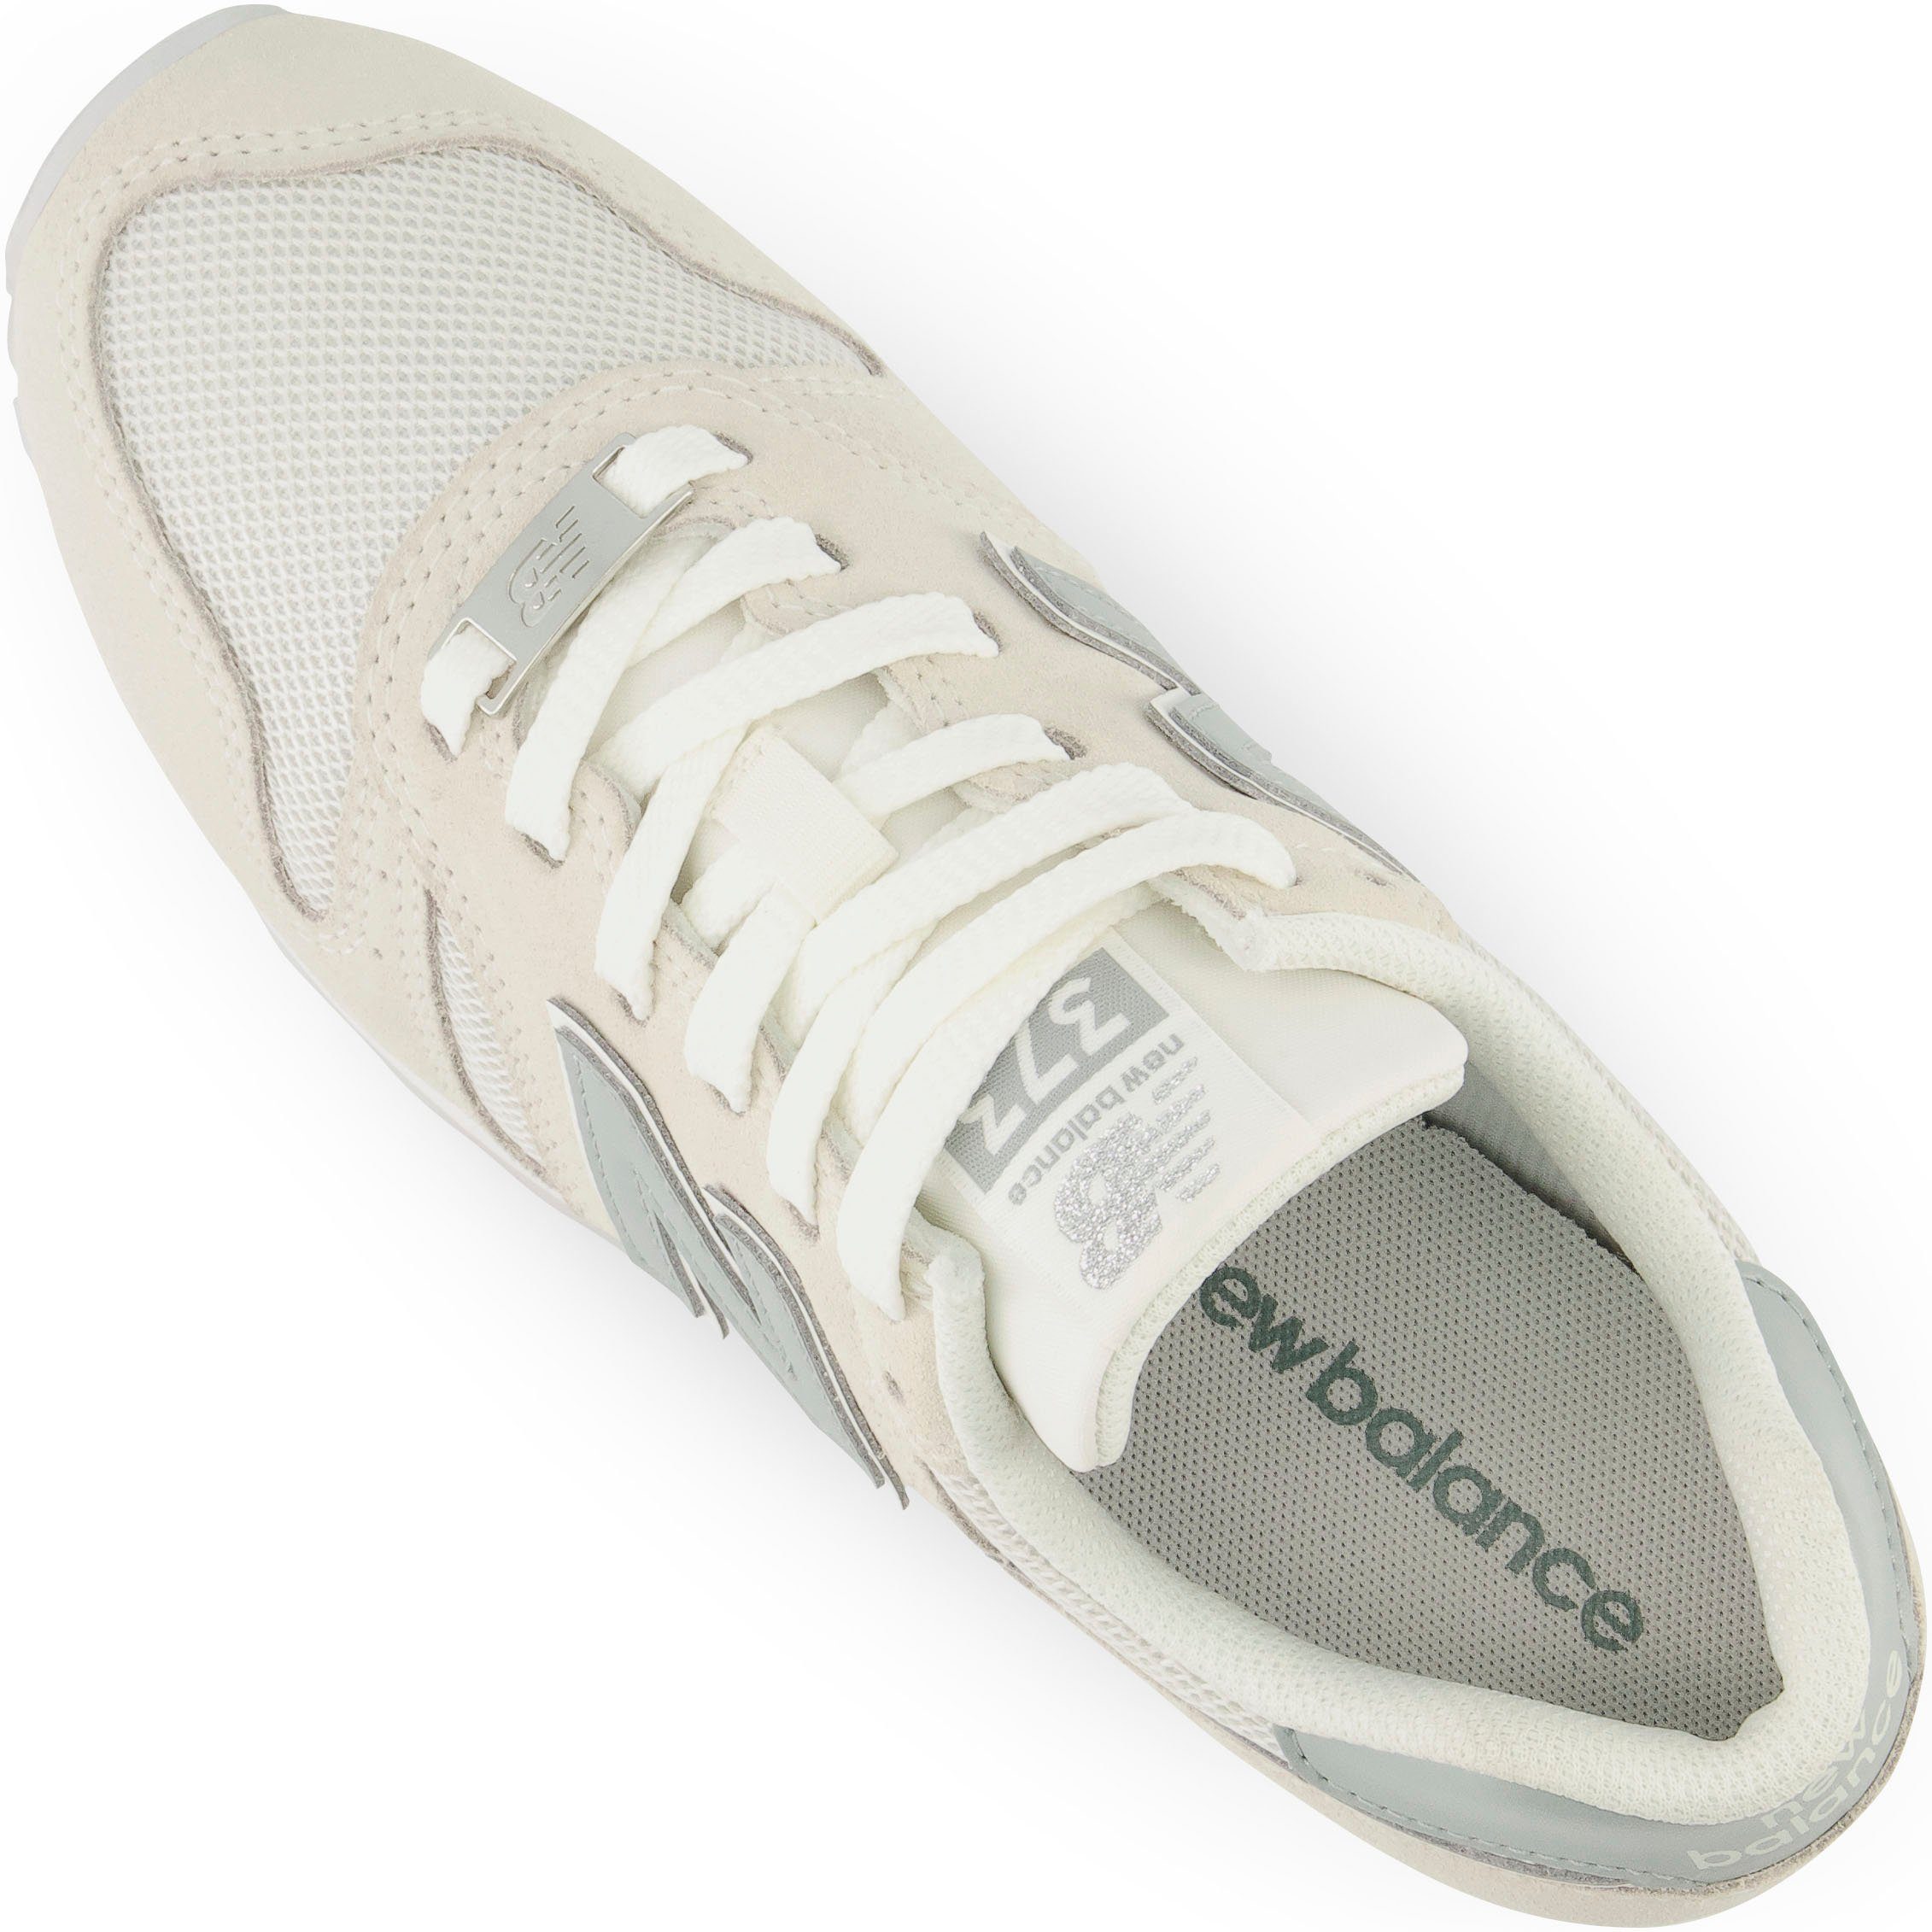 New Balance hellapricot WL373 Sneaker